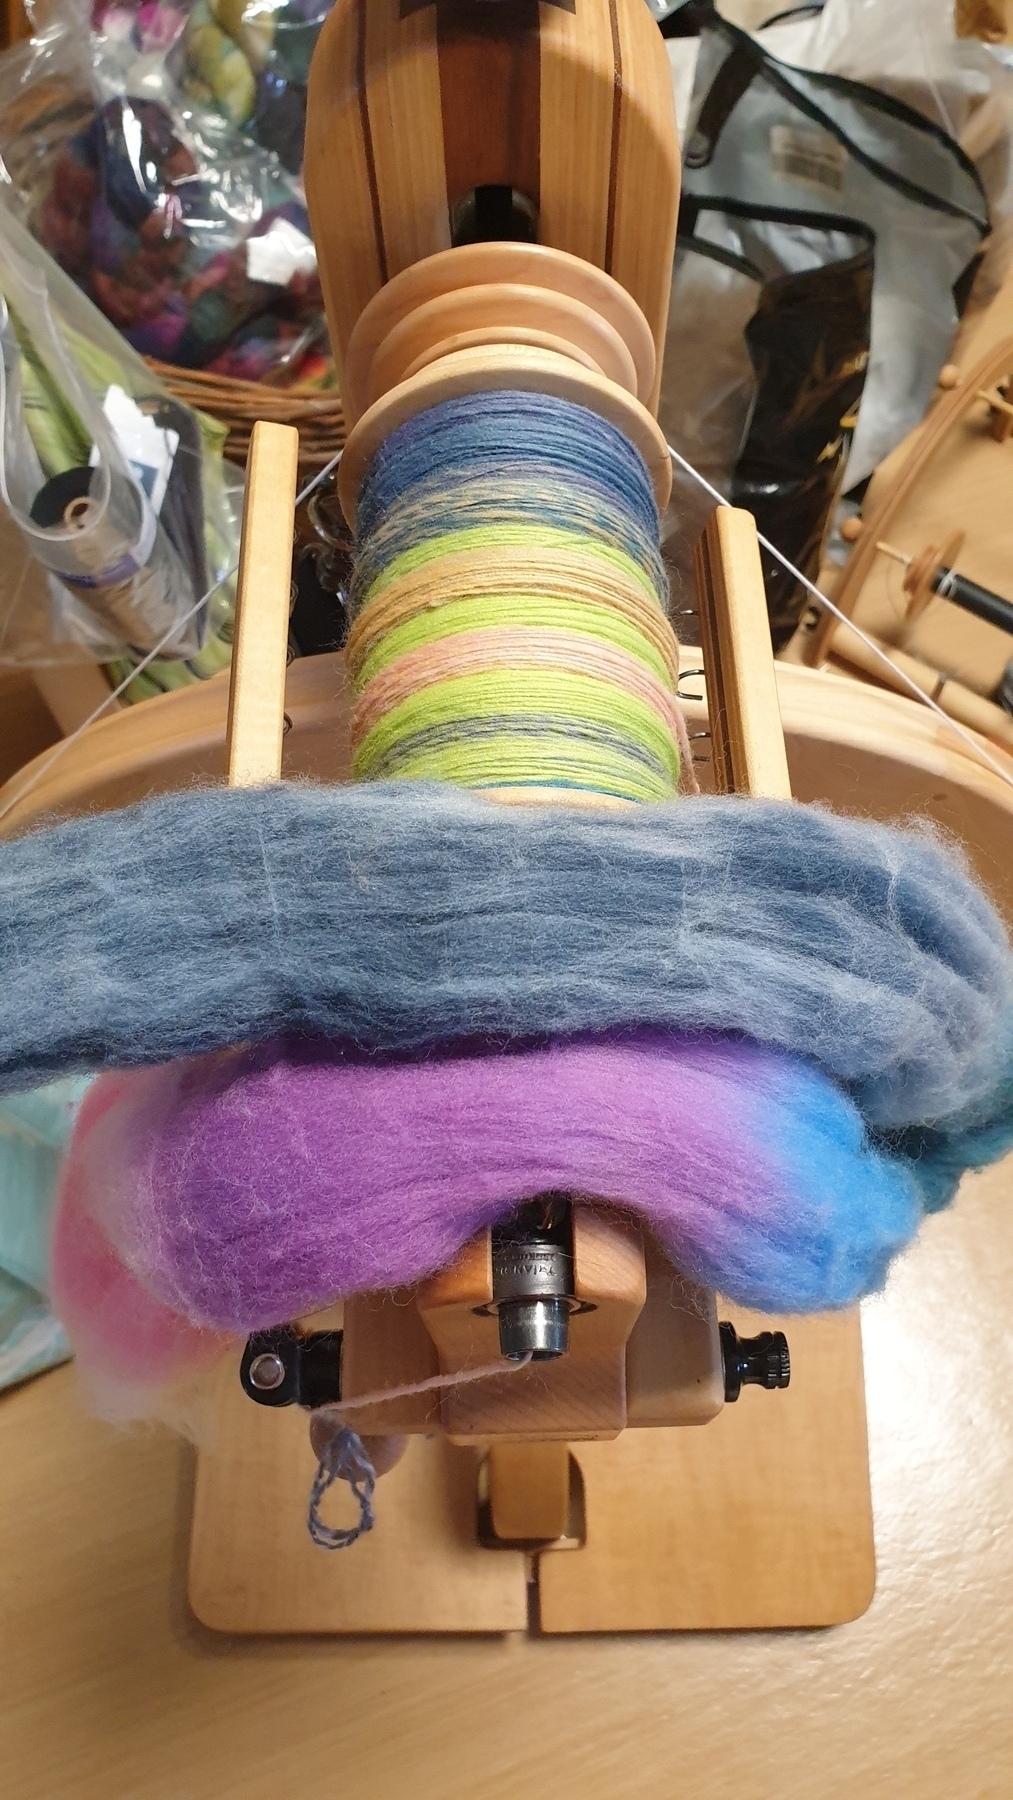 An almost full bobbin of spun yarn on a spinning wheel.